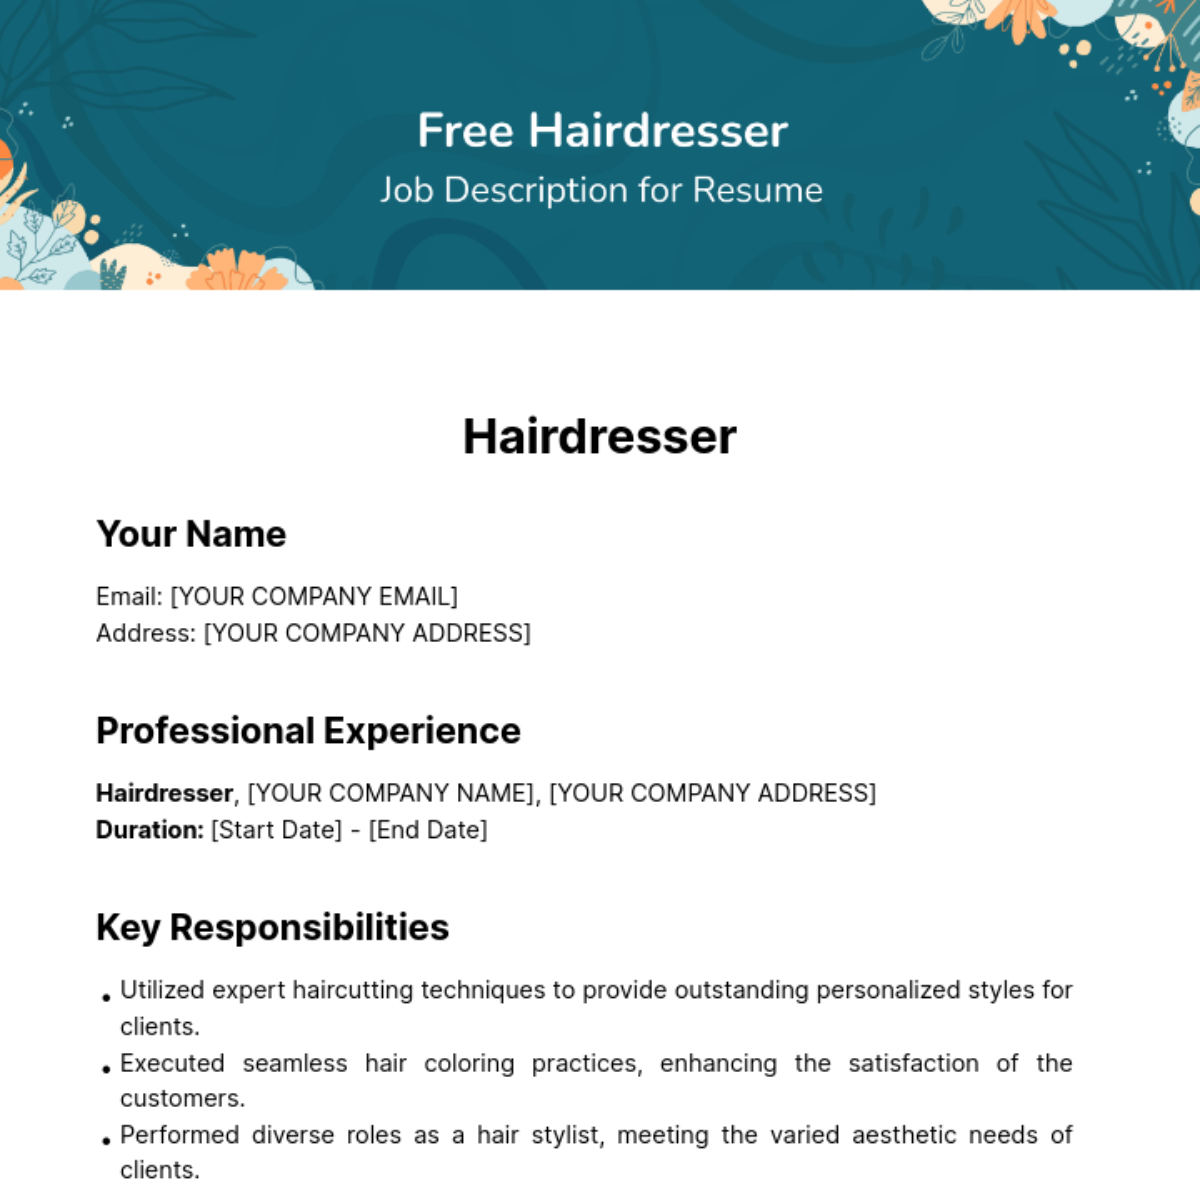 Hairdresser Job Description for Resume Template